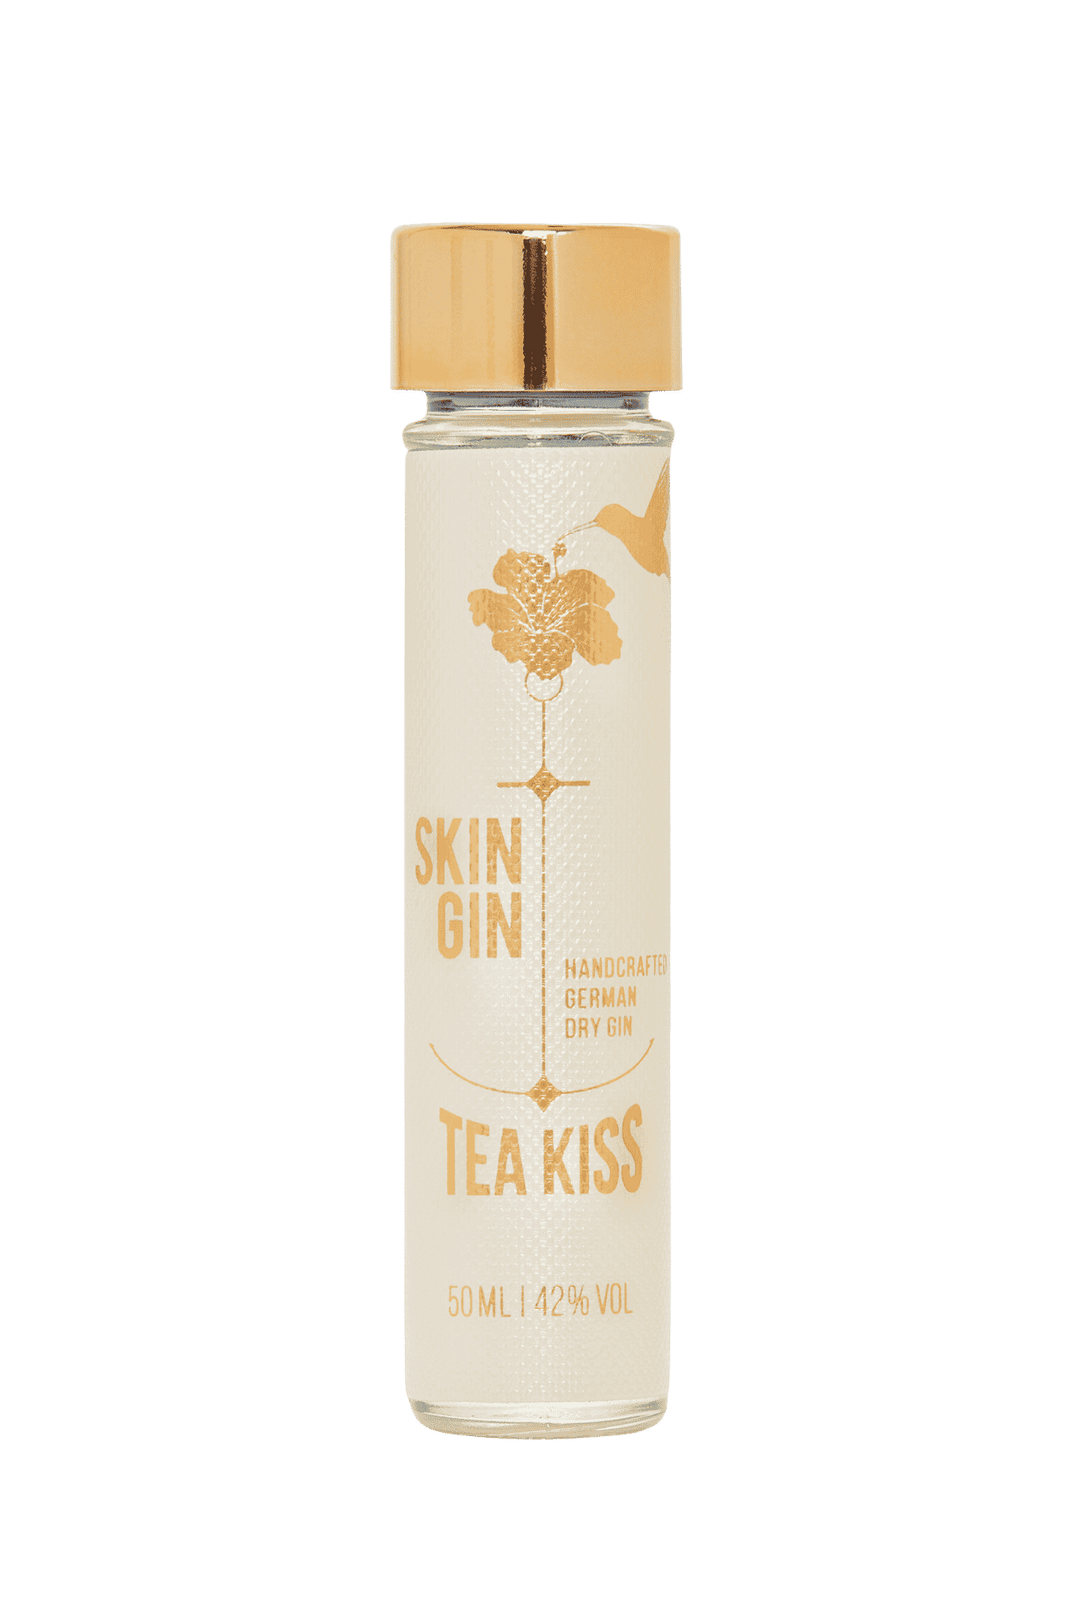 Skin Gin Tea Kiss Edition Probiergröße